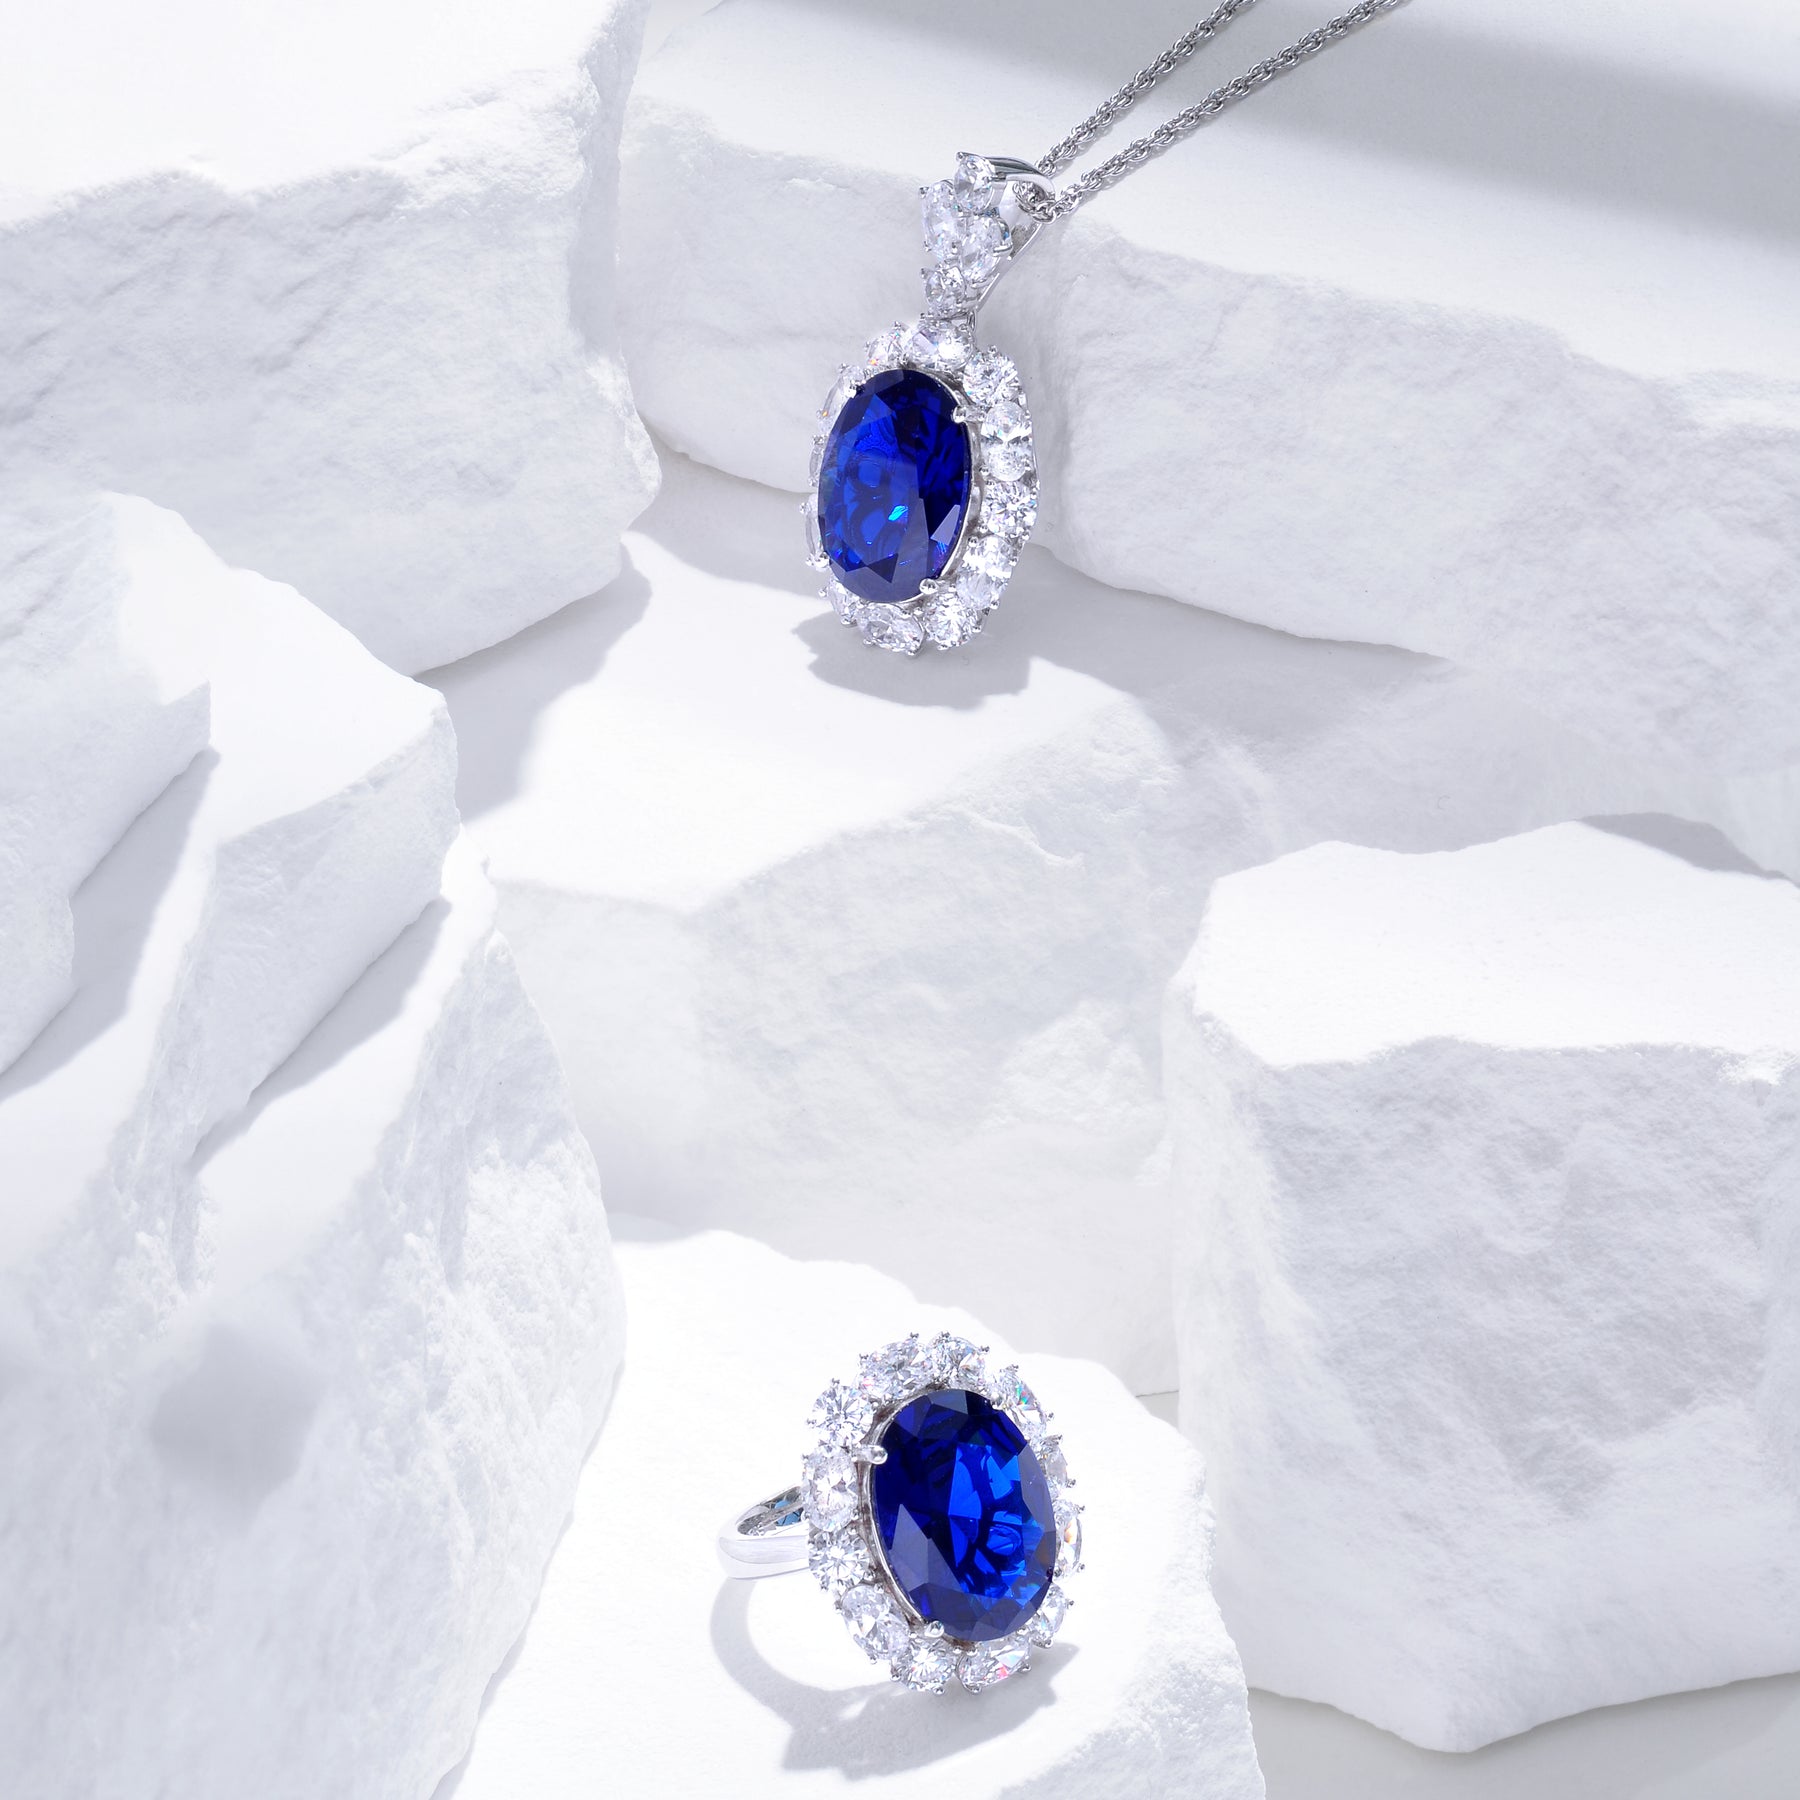 Dissoo® Oval Cut Sapphire Ring